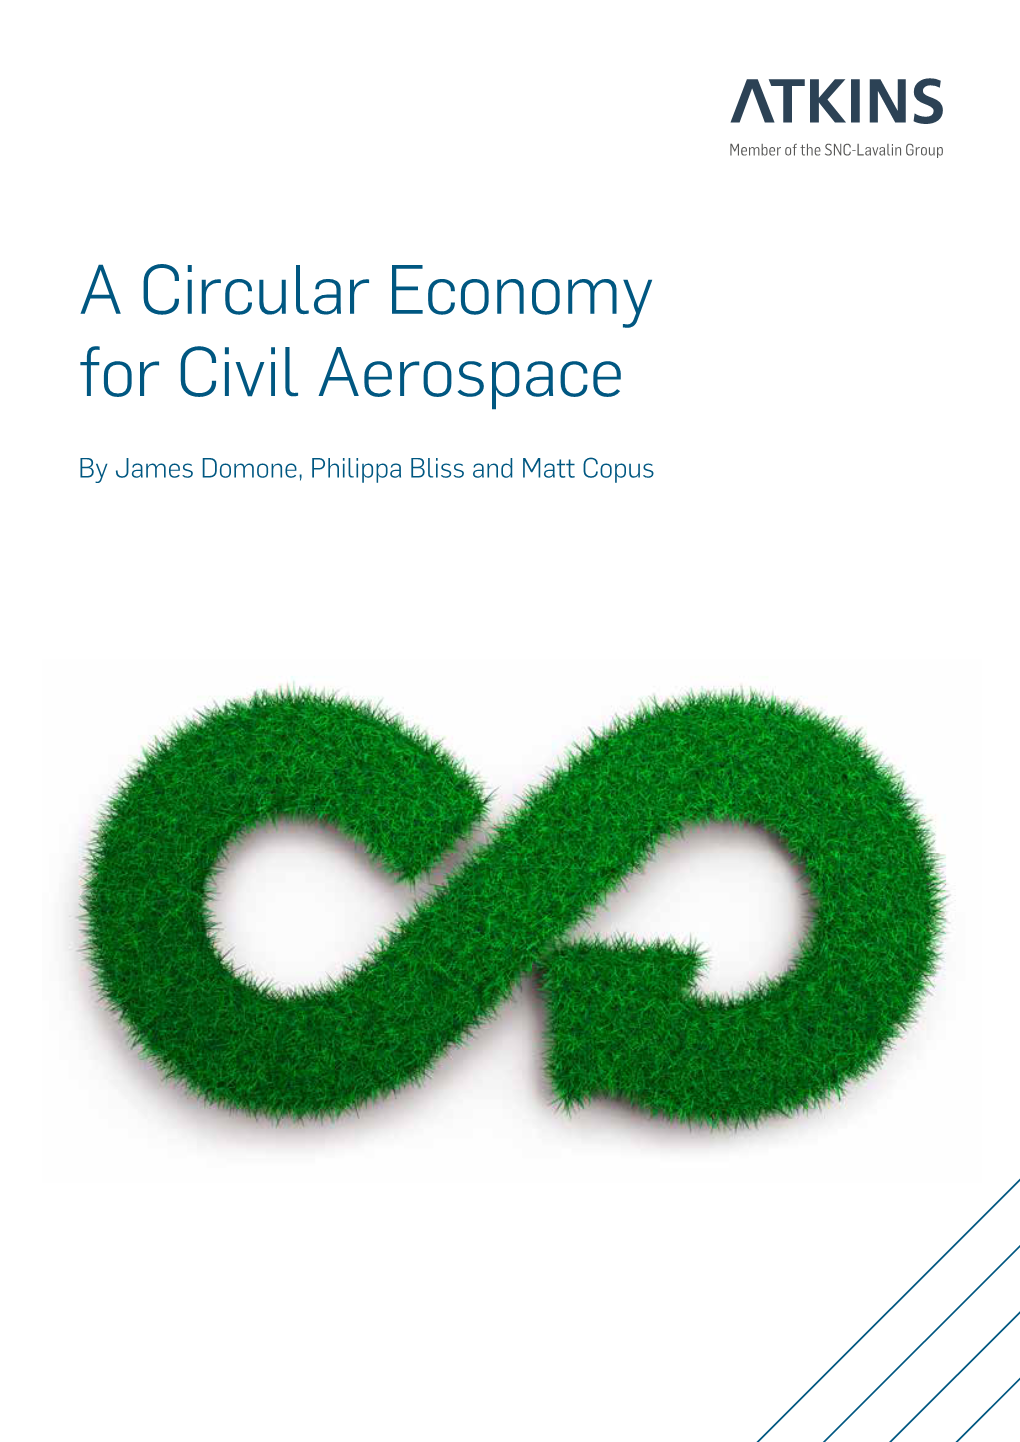 A Circular Economy for Civil Aerospace